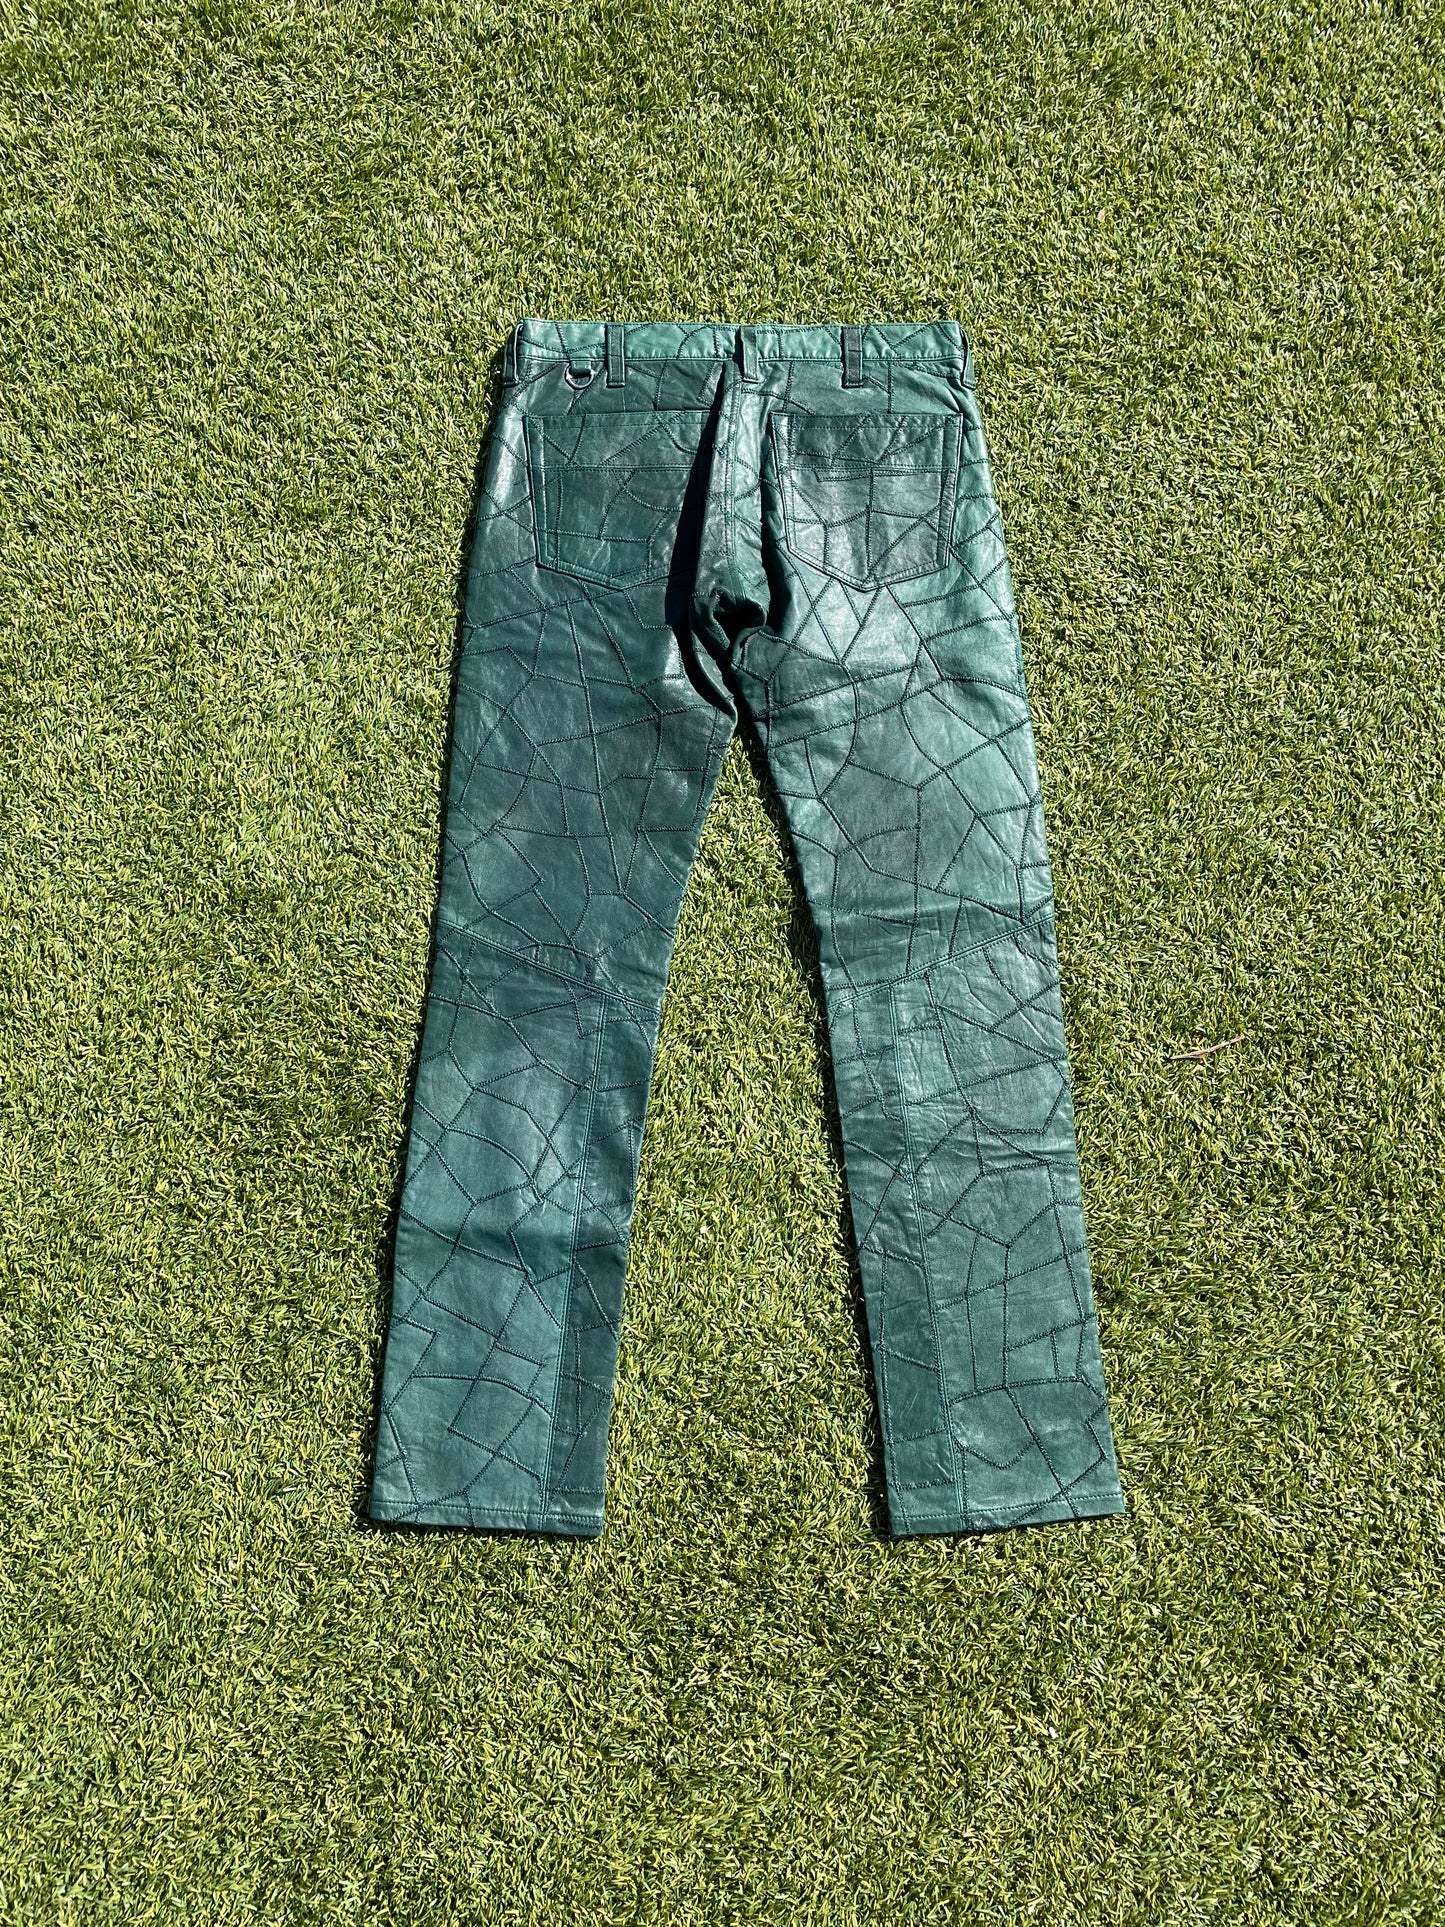 AW03 “Paperdoll” - Undercover Geometric Leather Stitch Denim